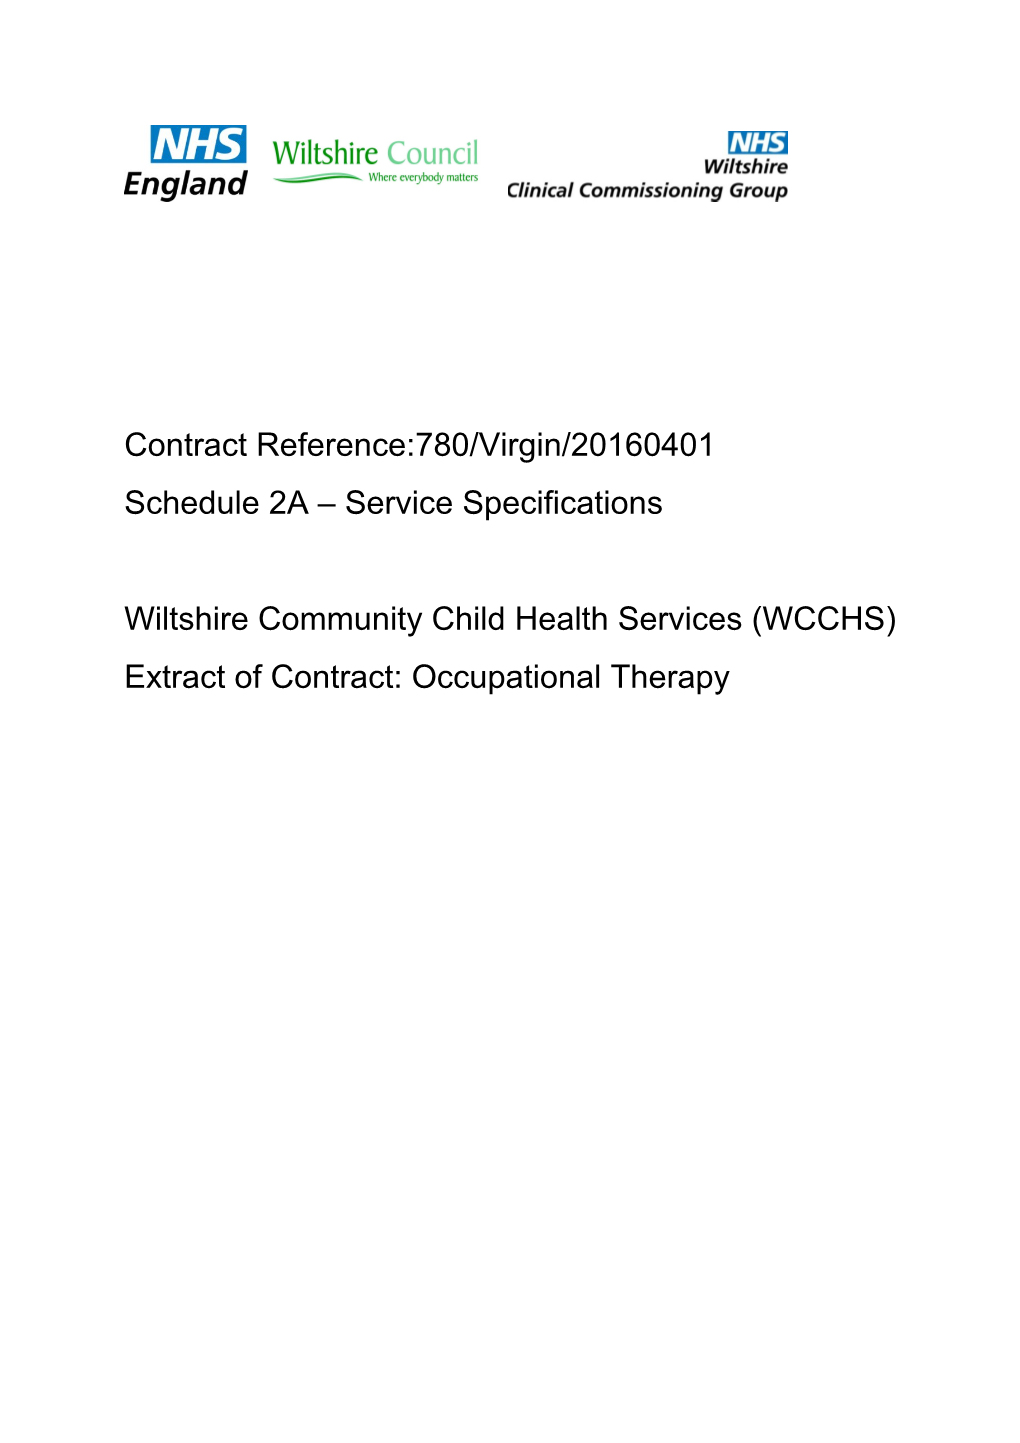 Wiltshire Community Child Health Services (WCCHS)